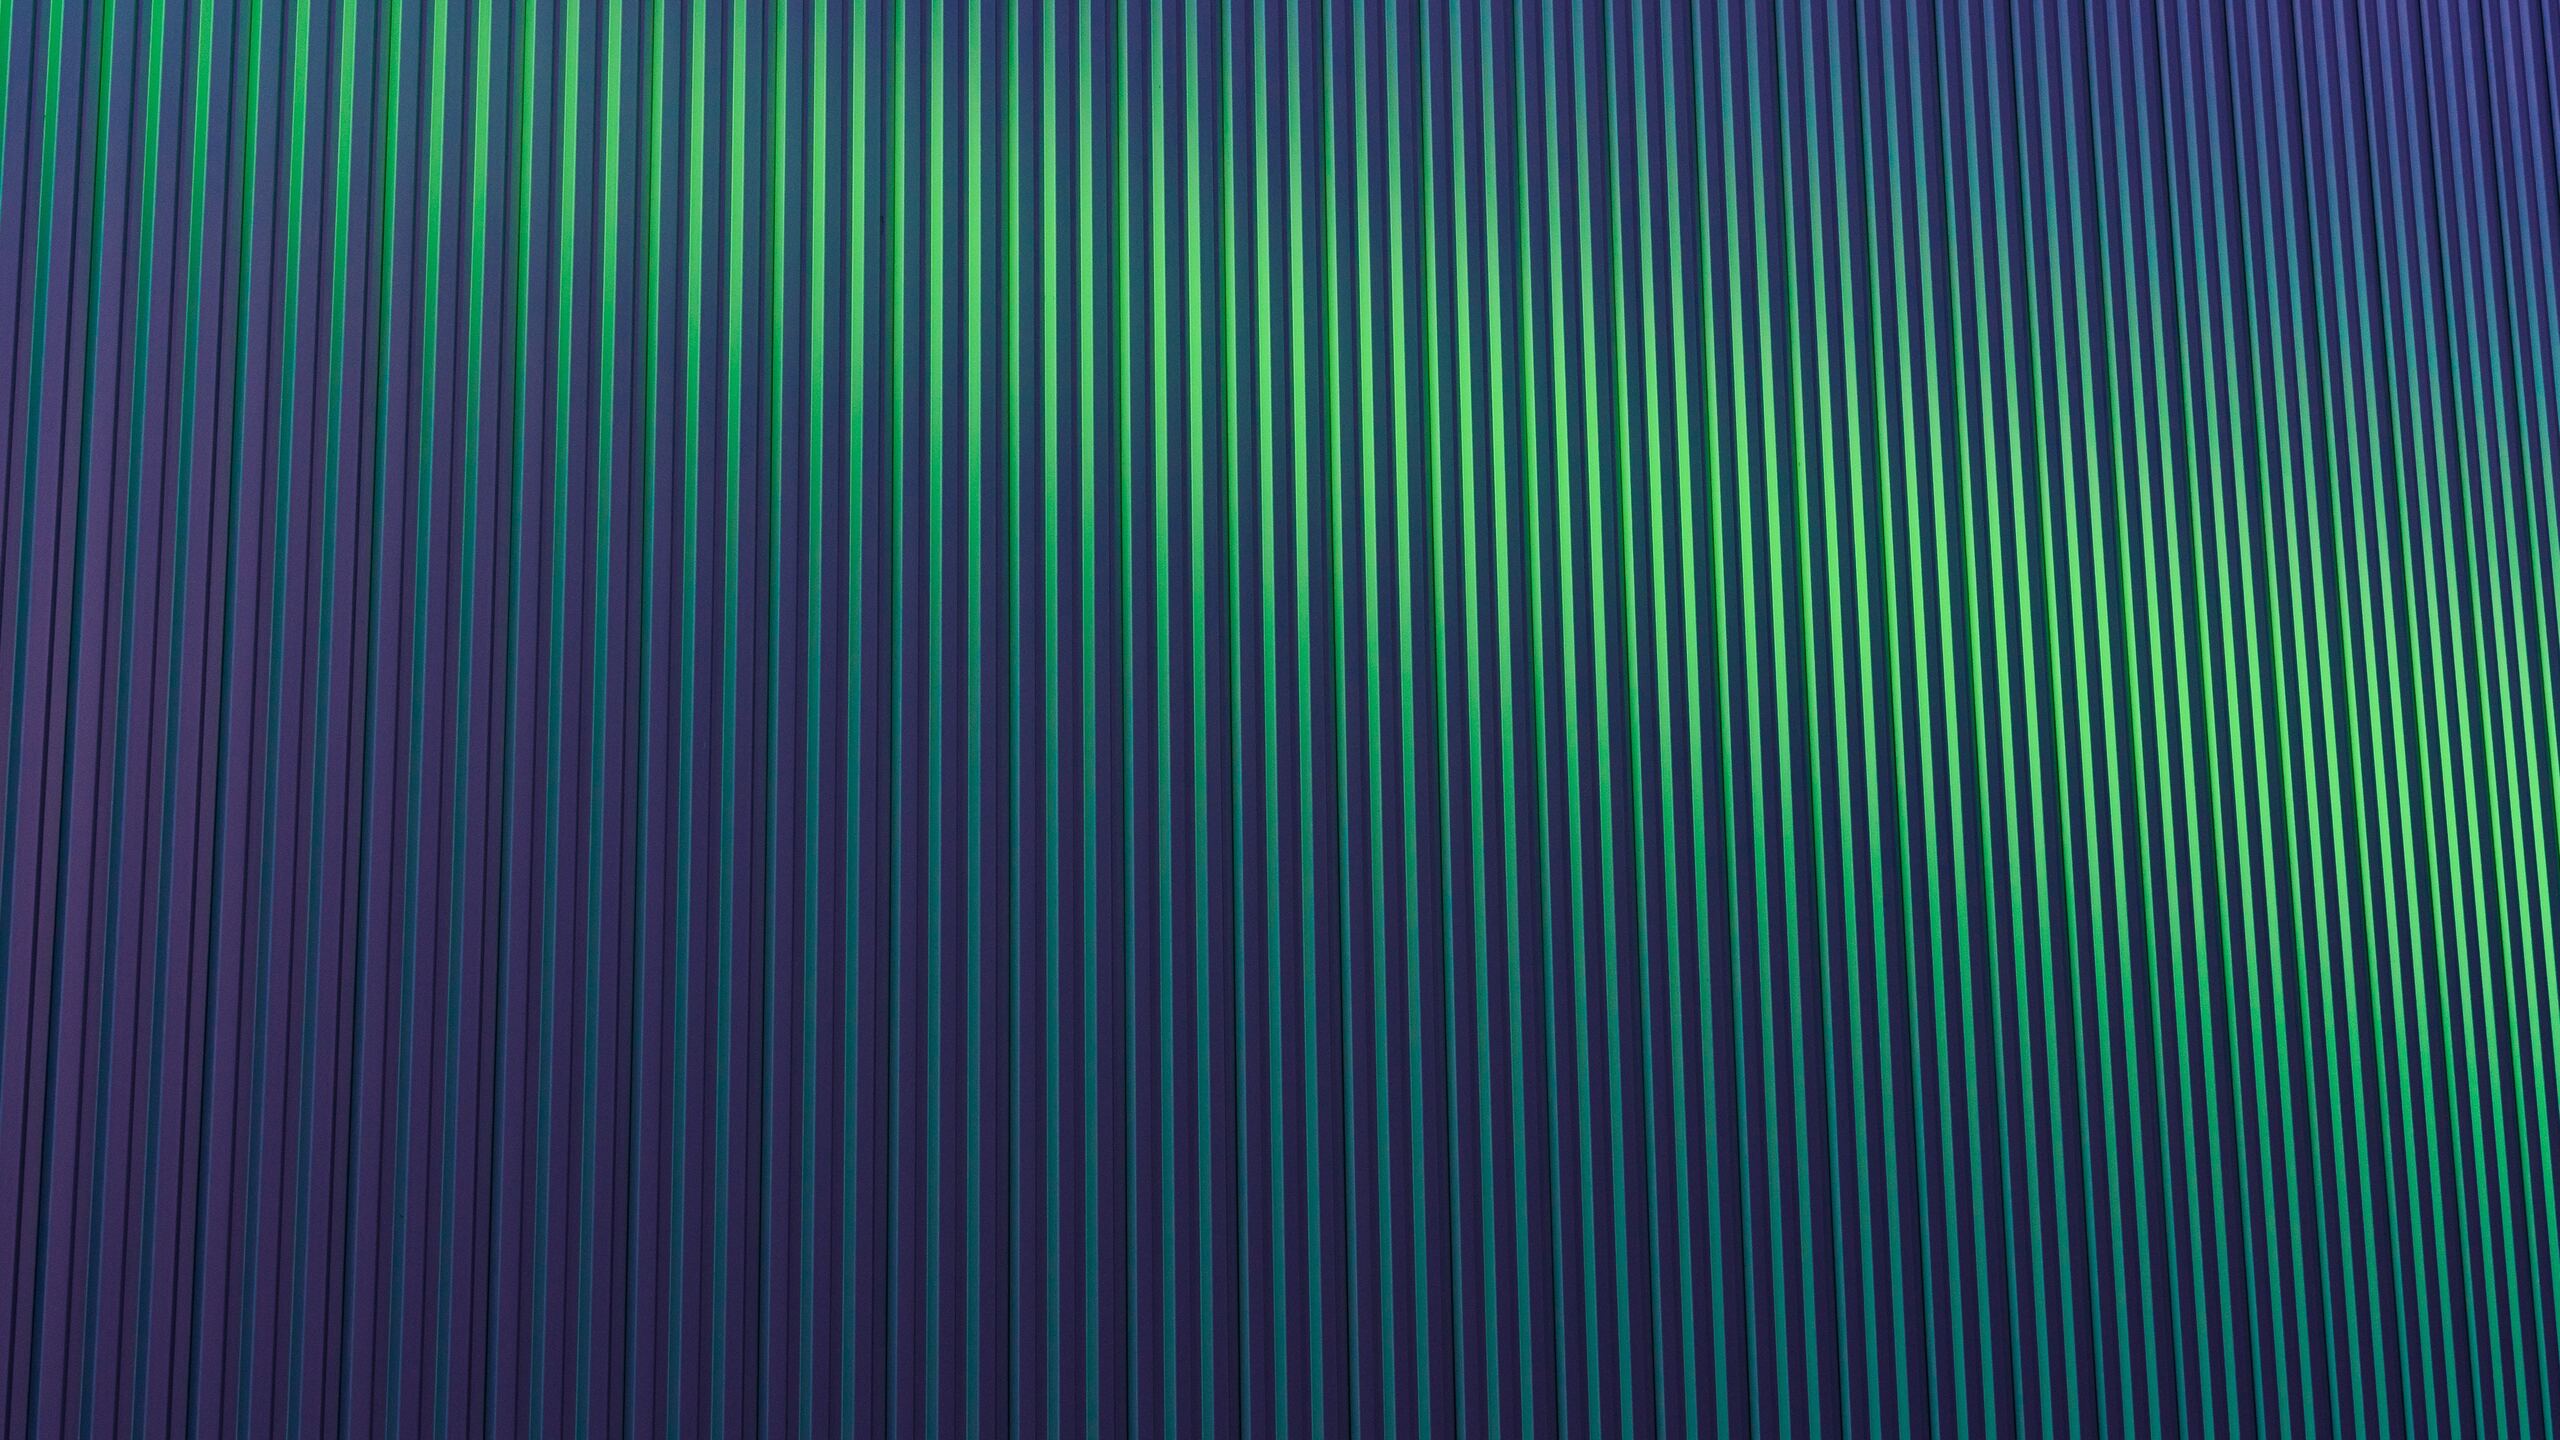 Vibrant Wallpapers 4K : Gaming laptop, vibrant, 4k, dark, abstract